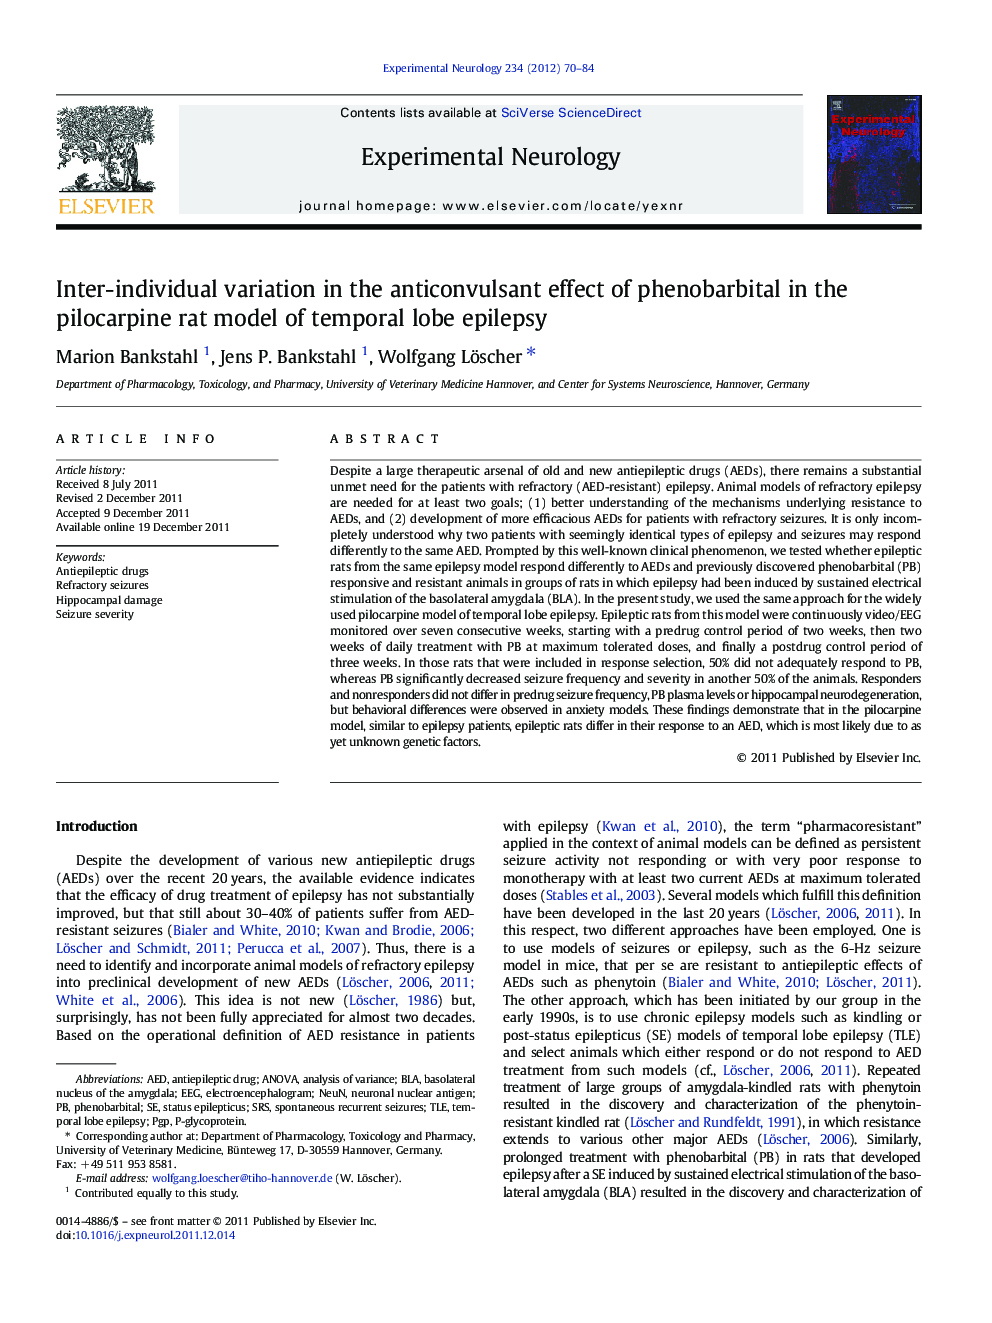 Inter-individual variation in the anticonvulsant effect of phenobarbital in the pilocarpine rat model of temporal lobe epilepsy